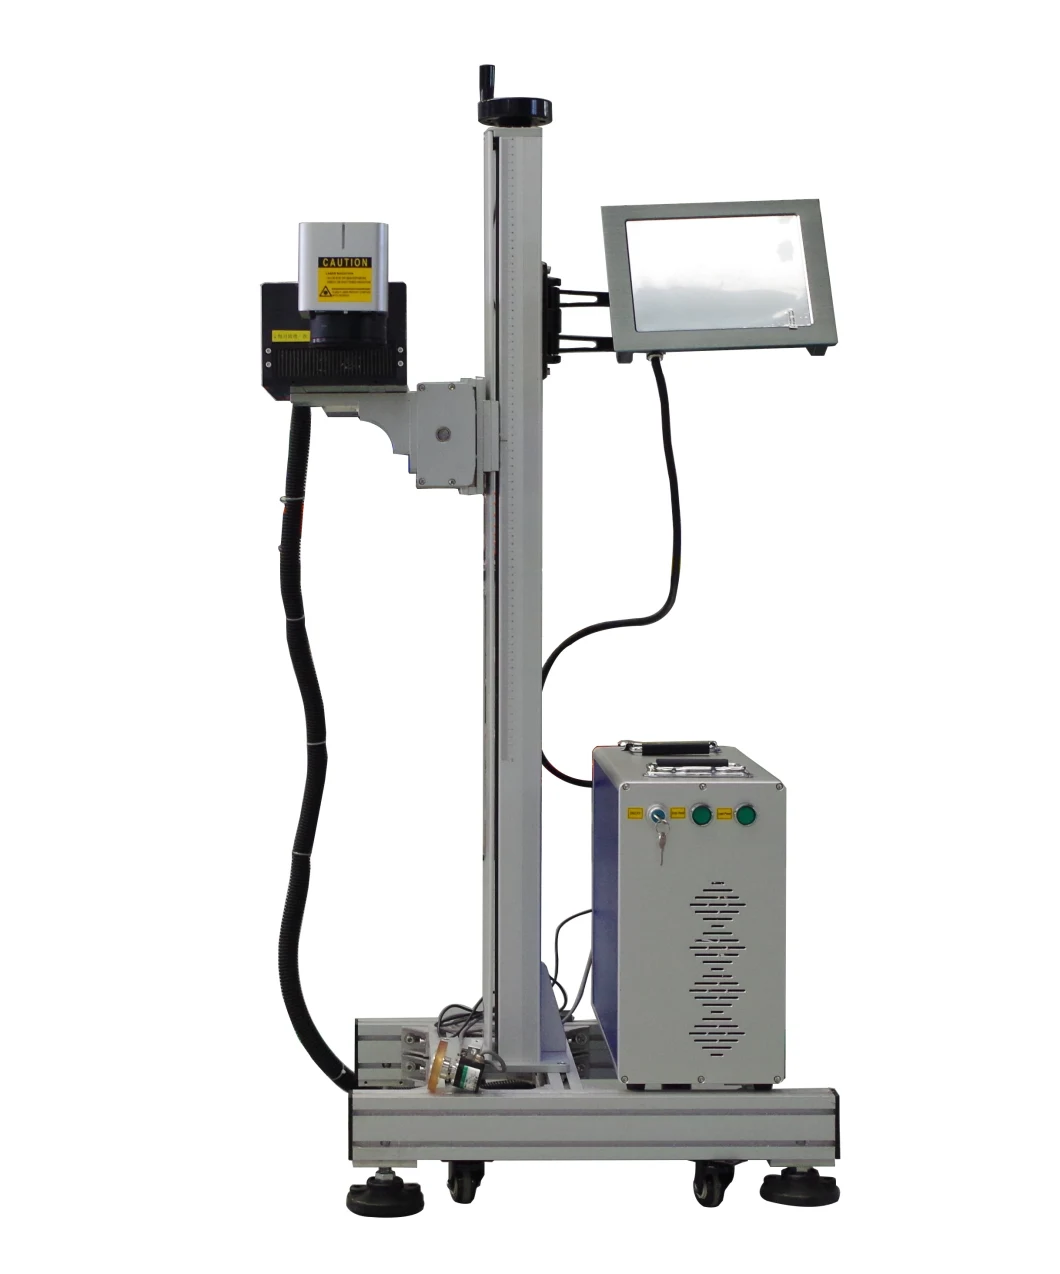 3W 5W 10W UV Laser Marking Machine with Conveyor Belt for Marking Food Packaging Bags